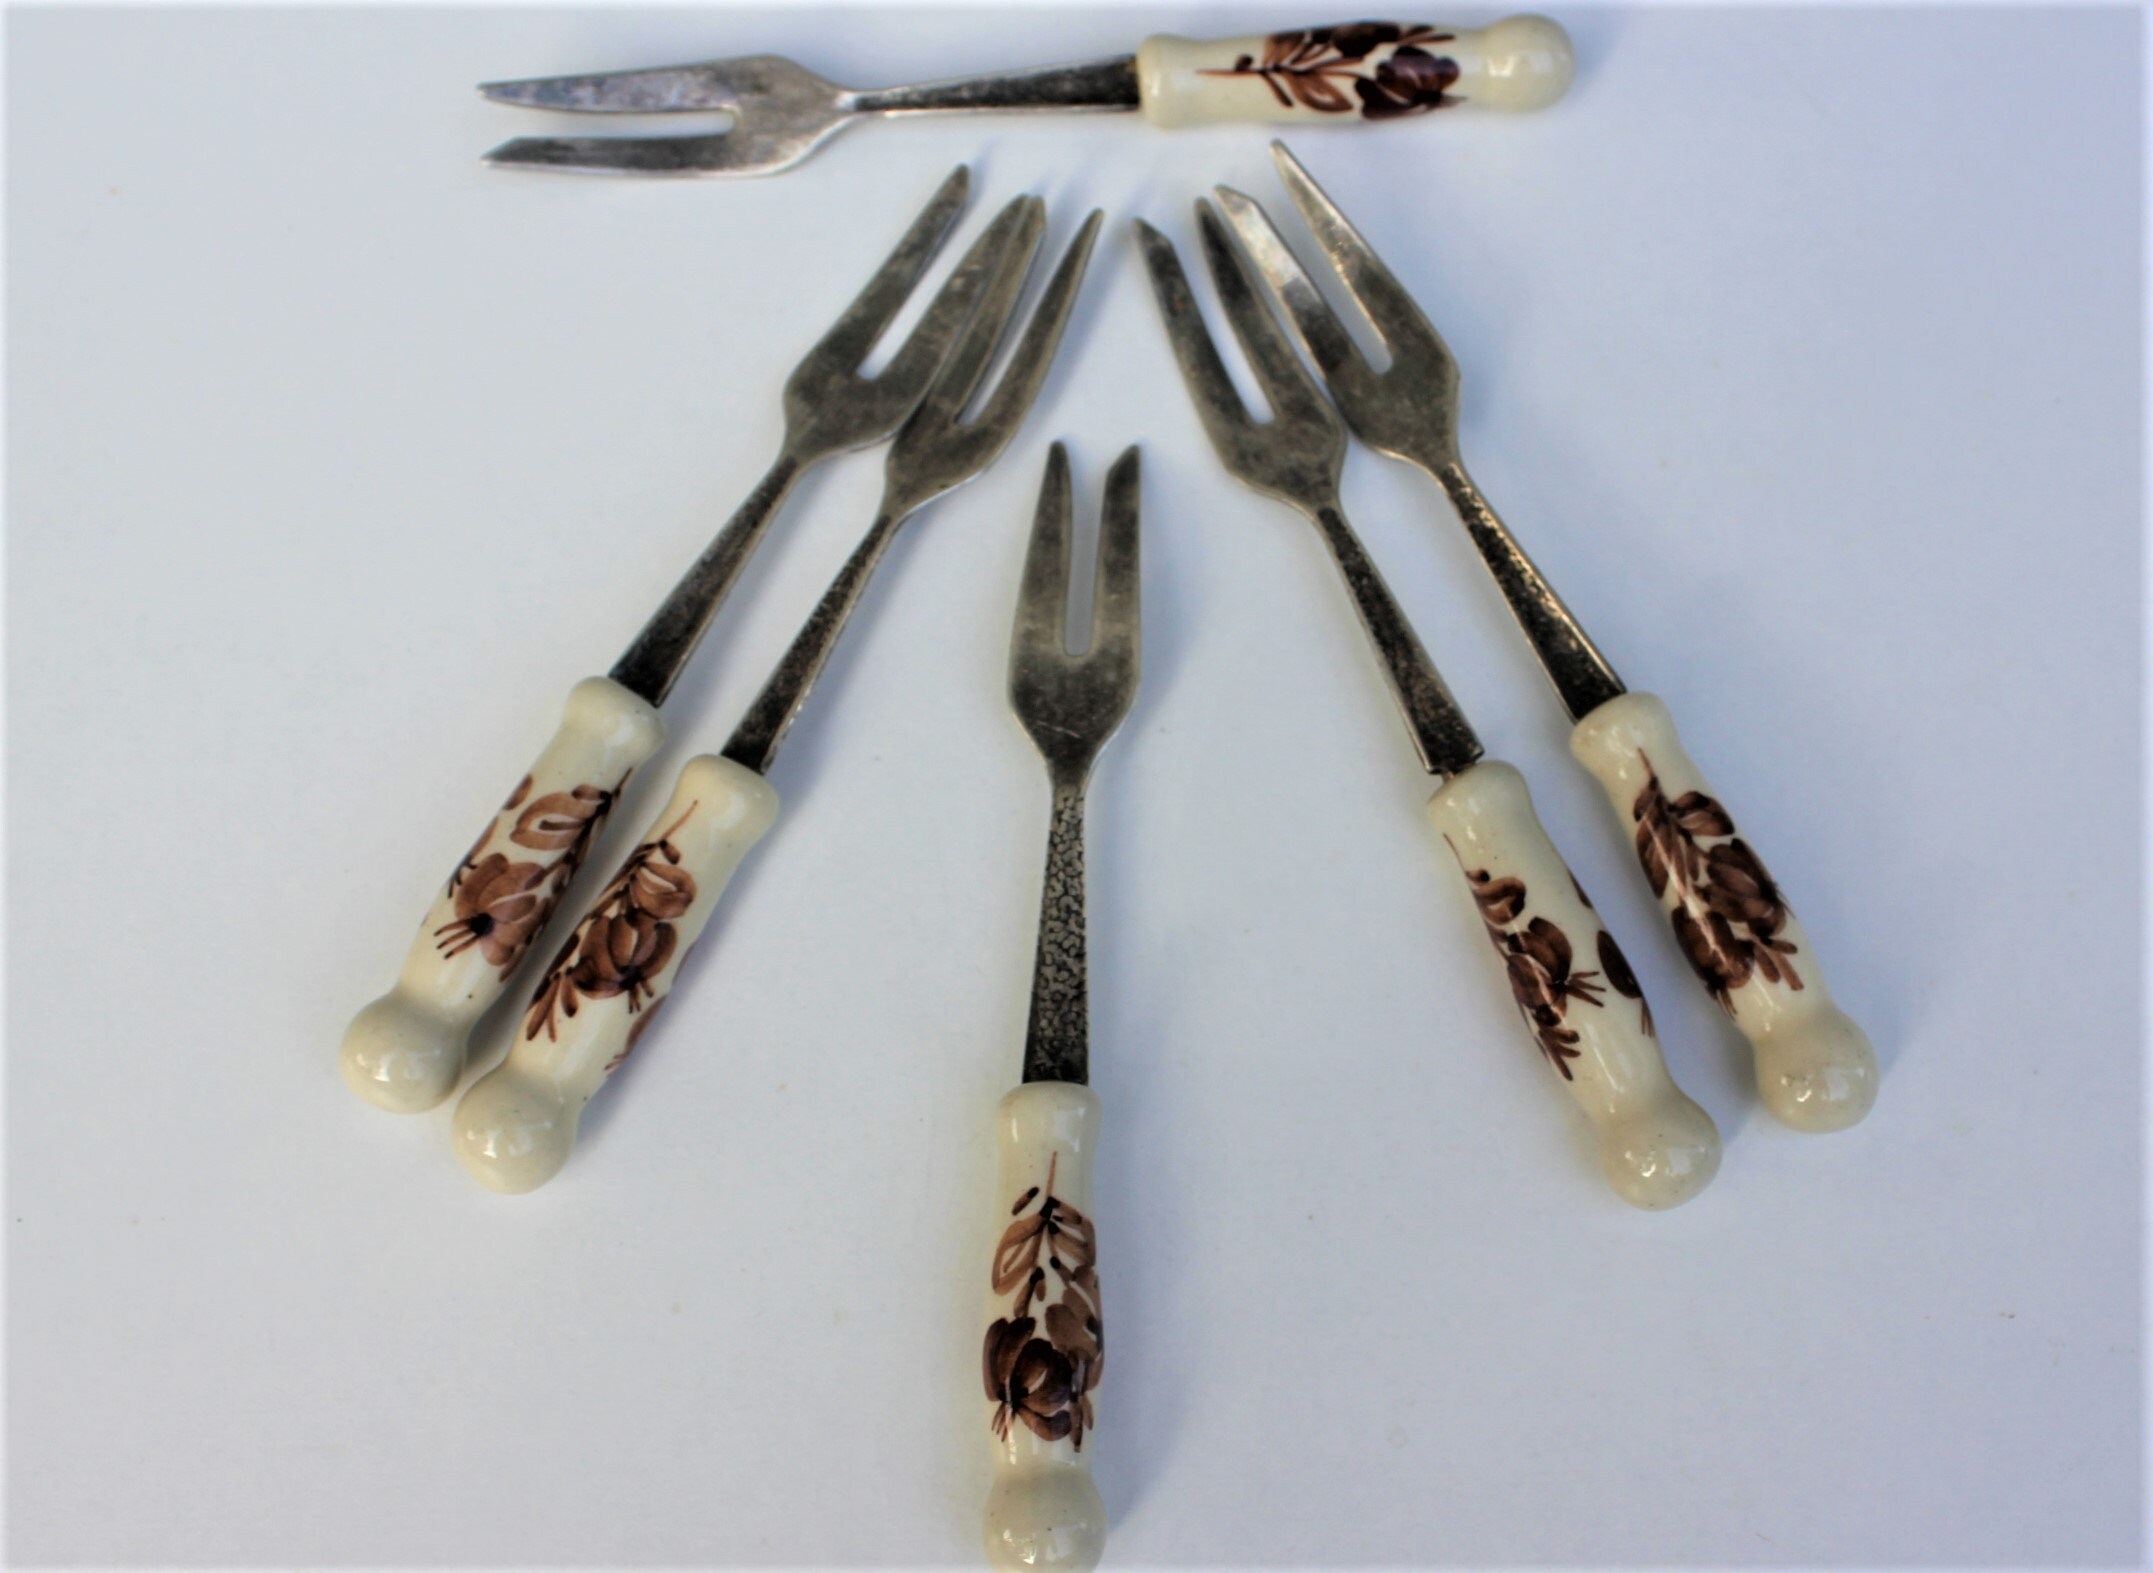 6 Vintage Cake Forks Stainless Steel Porcelain Silver Colored Etsy